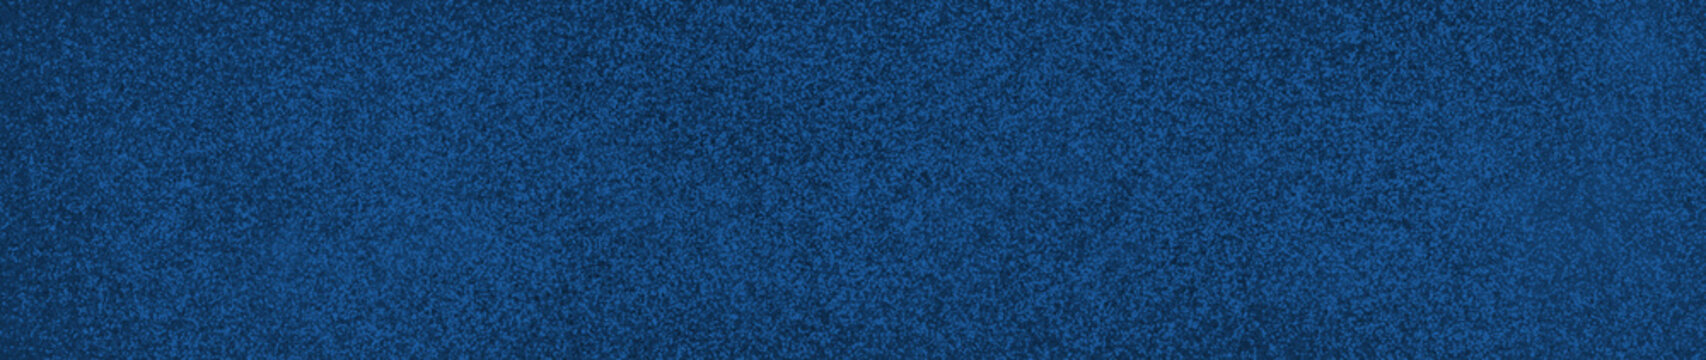 fondo abstracto azul, azulino, azul brillante, mar, marino,  con texturas, brillo. Para diseño, vacio, bandera web, ruido, grano poroso, rugoso, cemento, pared, para diseño, textura de tela, de  cerca